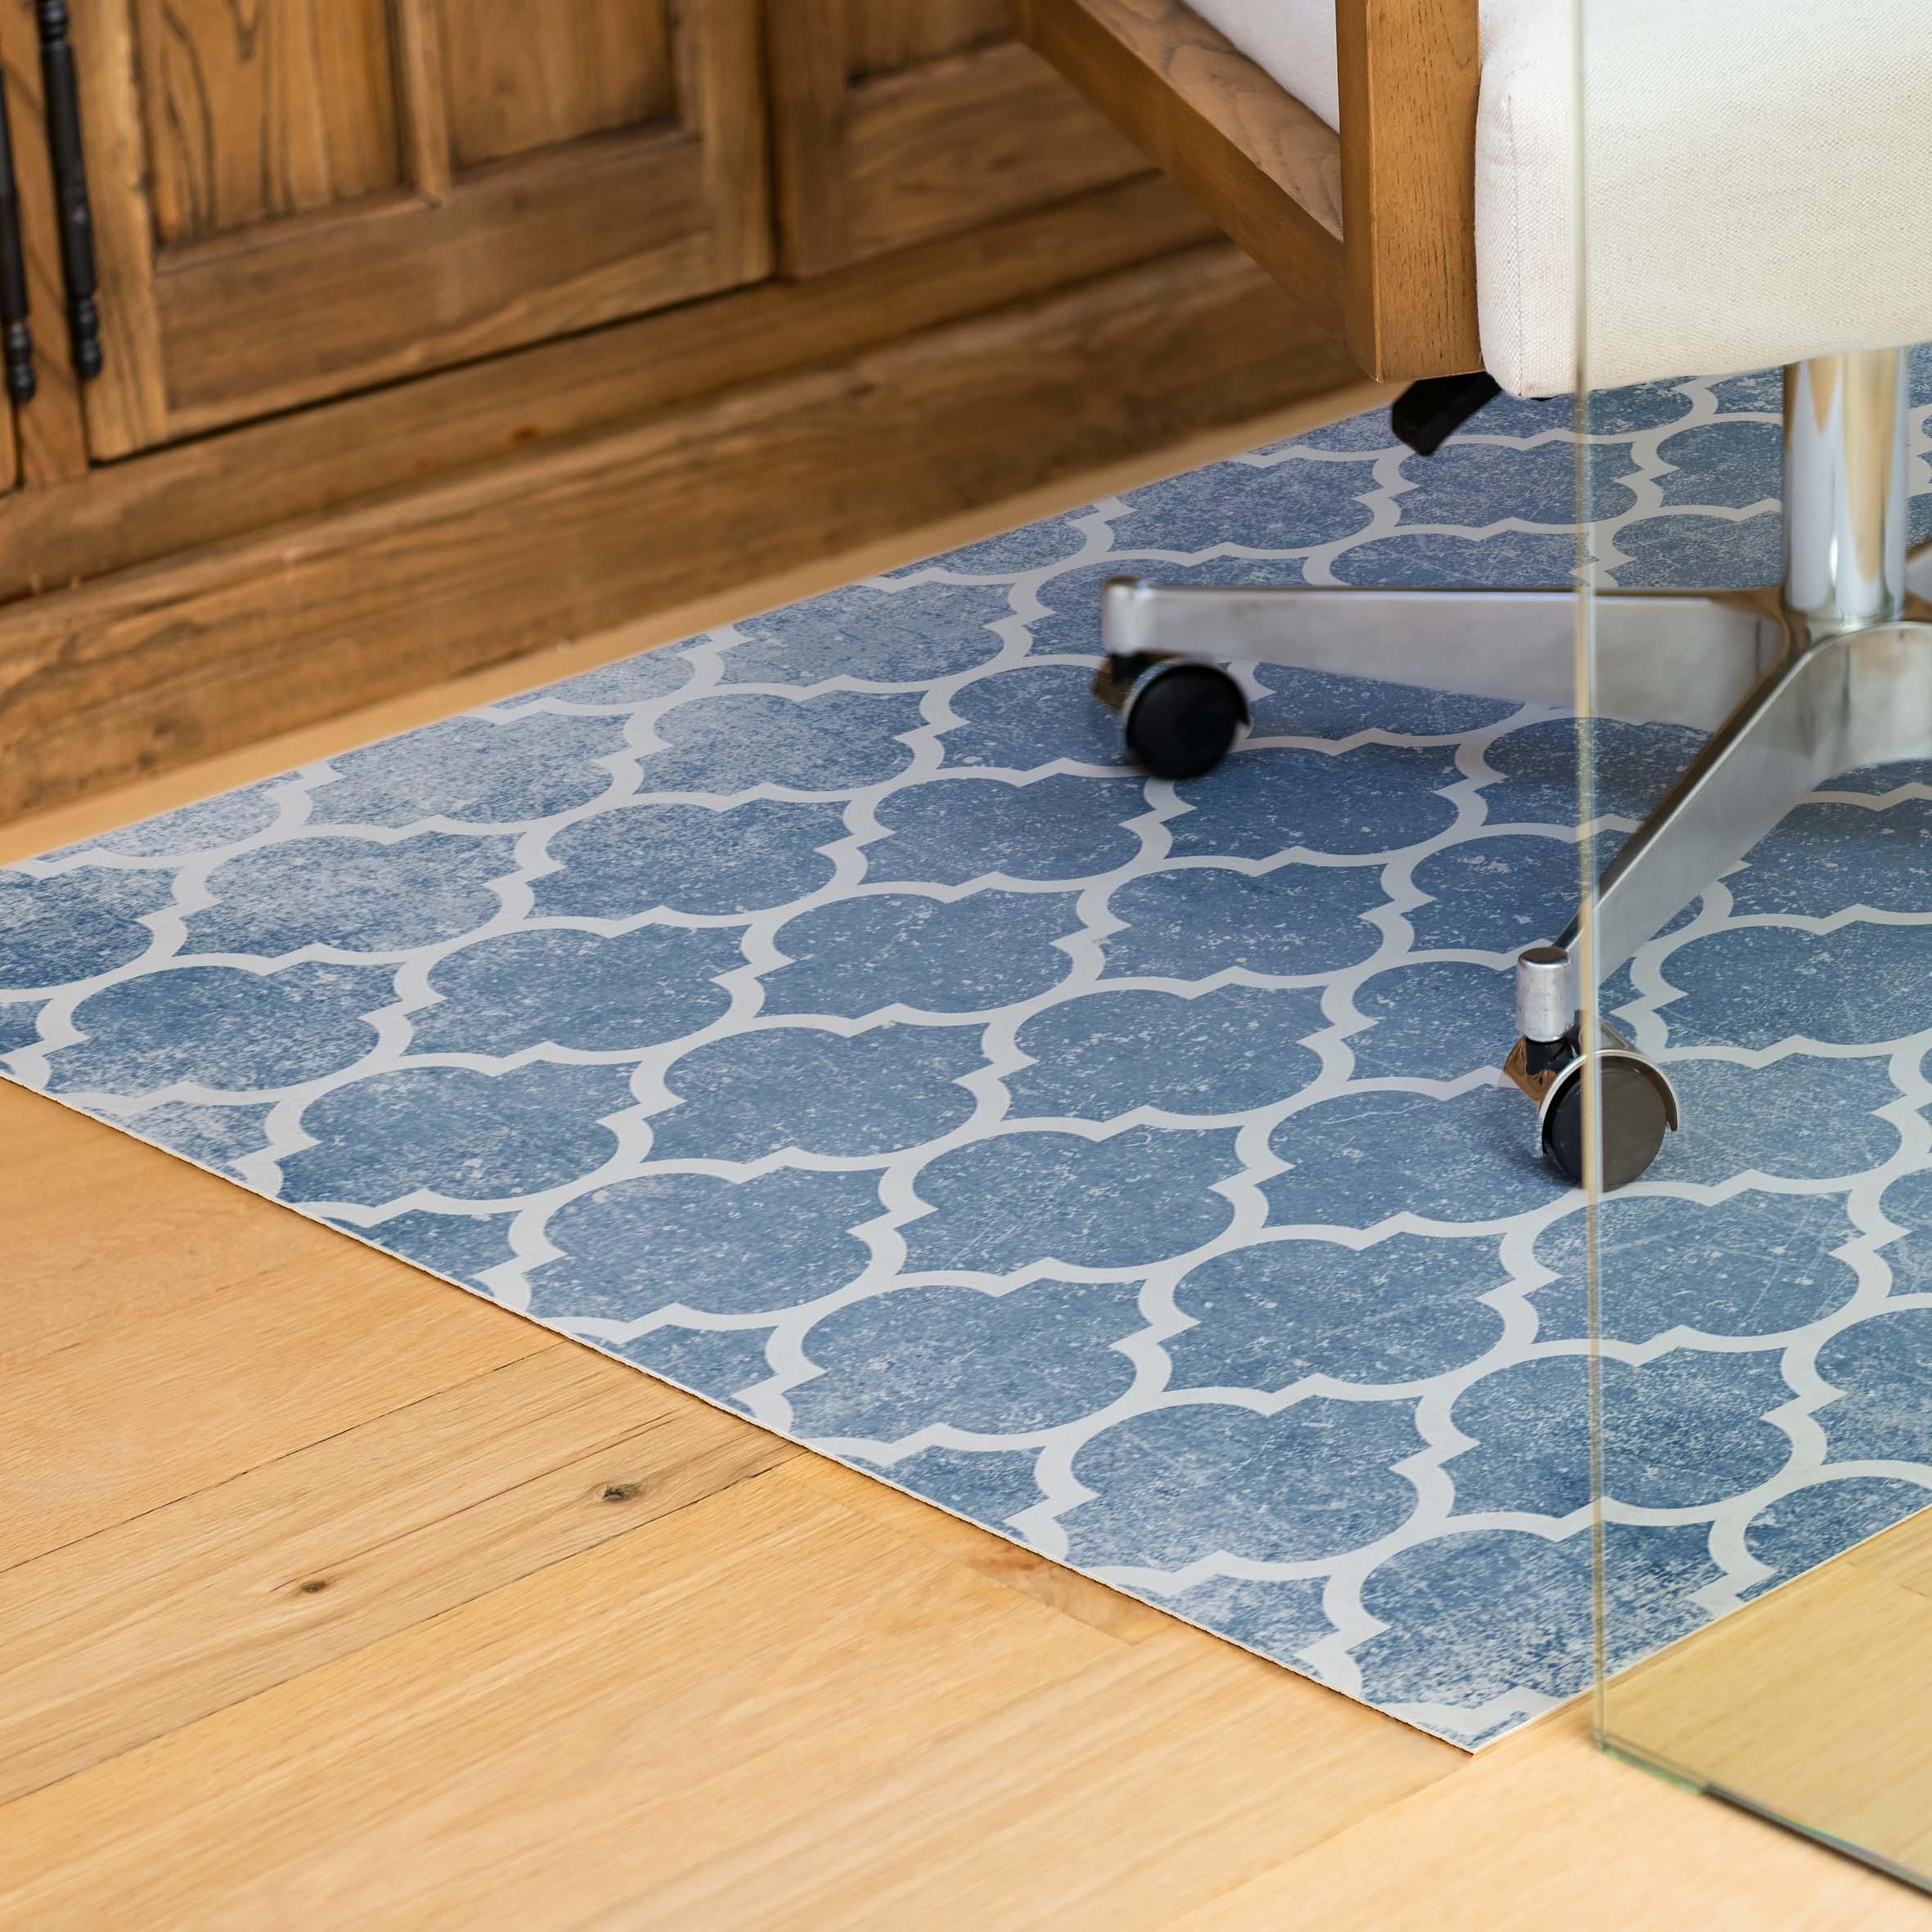 Ava Chair OfficeFlat | Blue - Premium Vinyl Floor Mat - Carolina Creekhouse Easy to Clean Premium Vinyl Mats